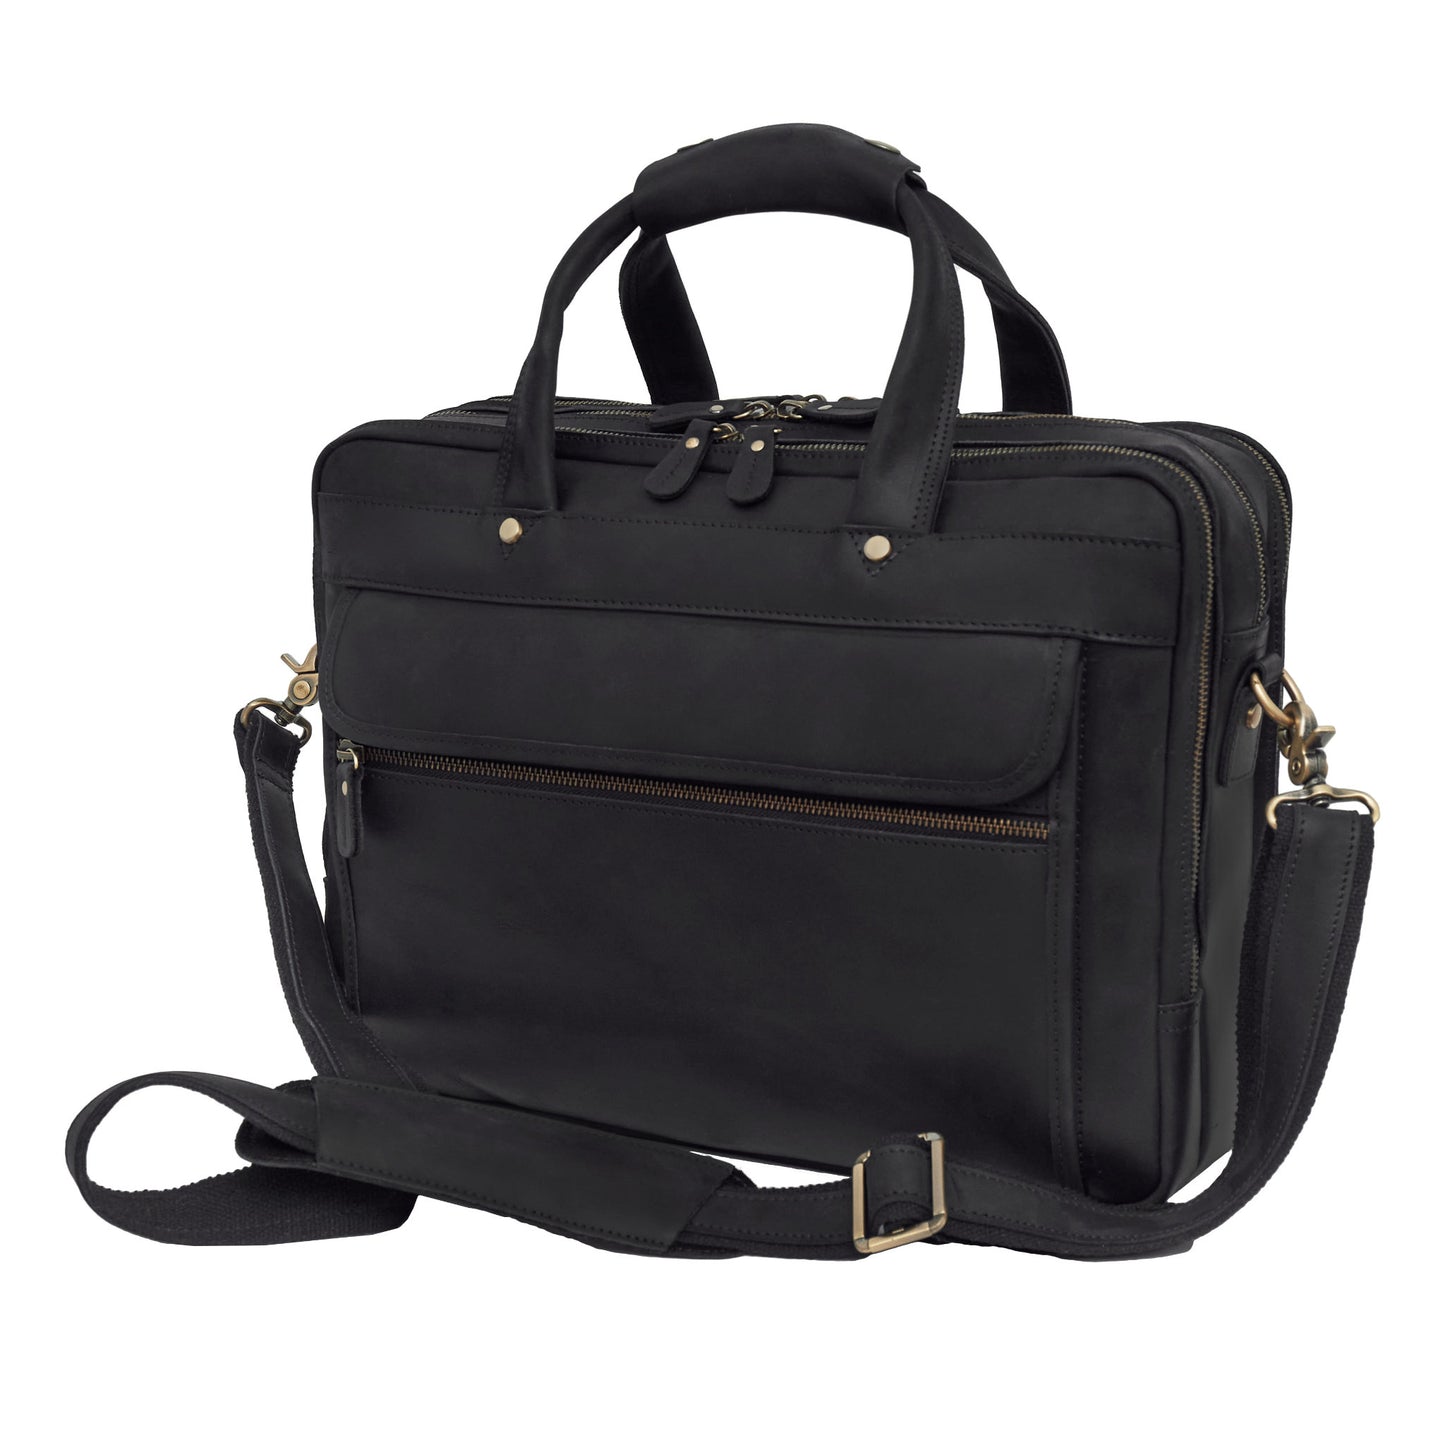 Luxorro Leather Briefcase Laptop Bag for Men – Soft, Leather Messenger Bag, Last's a Lifetime – Lifetime Warranty – Fits 15-Inch, Black